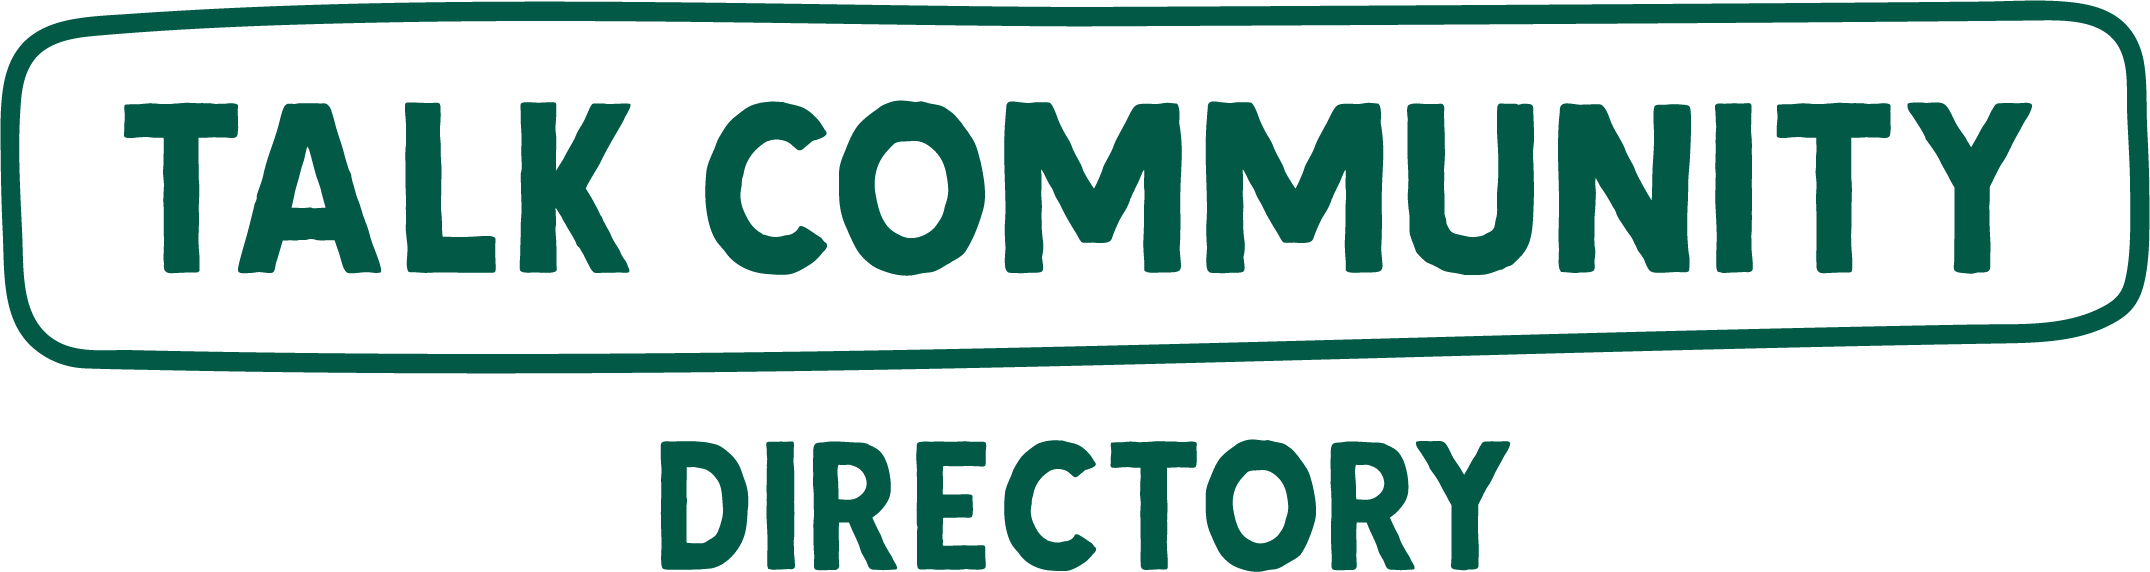 Talk Community Directory logo